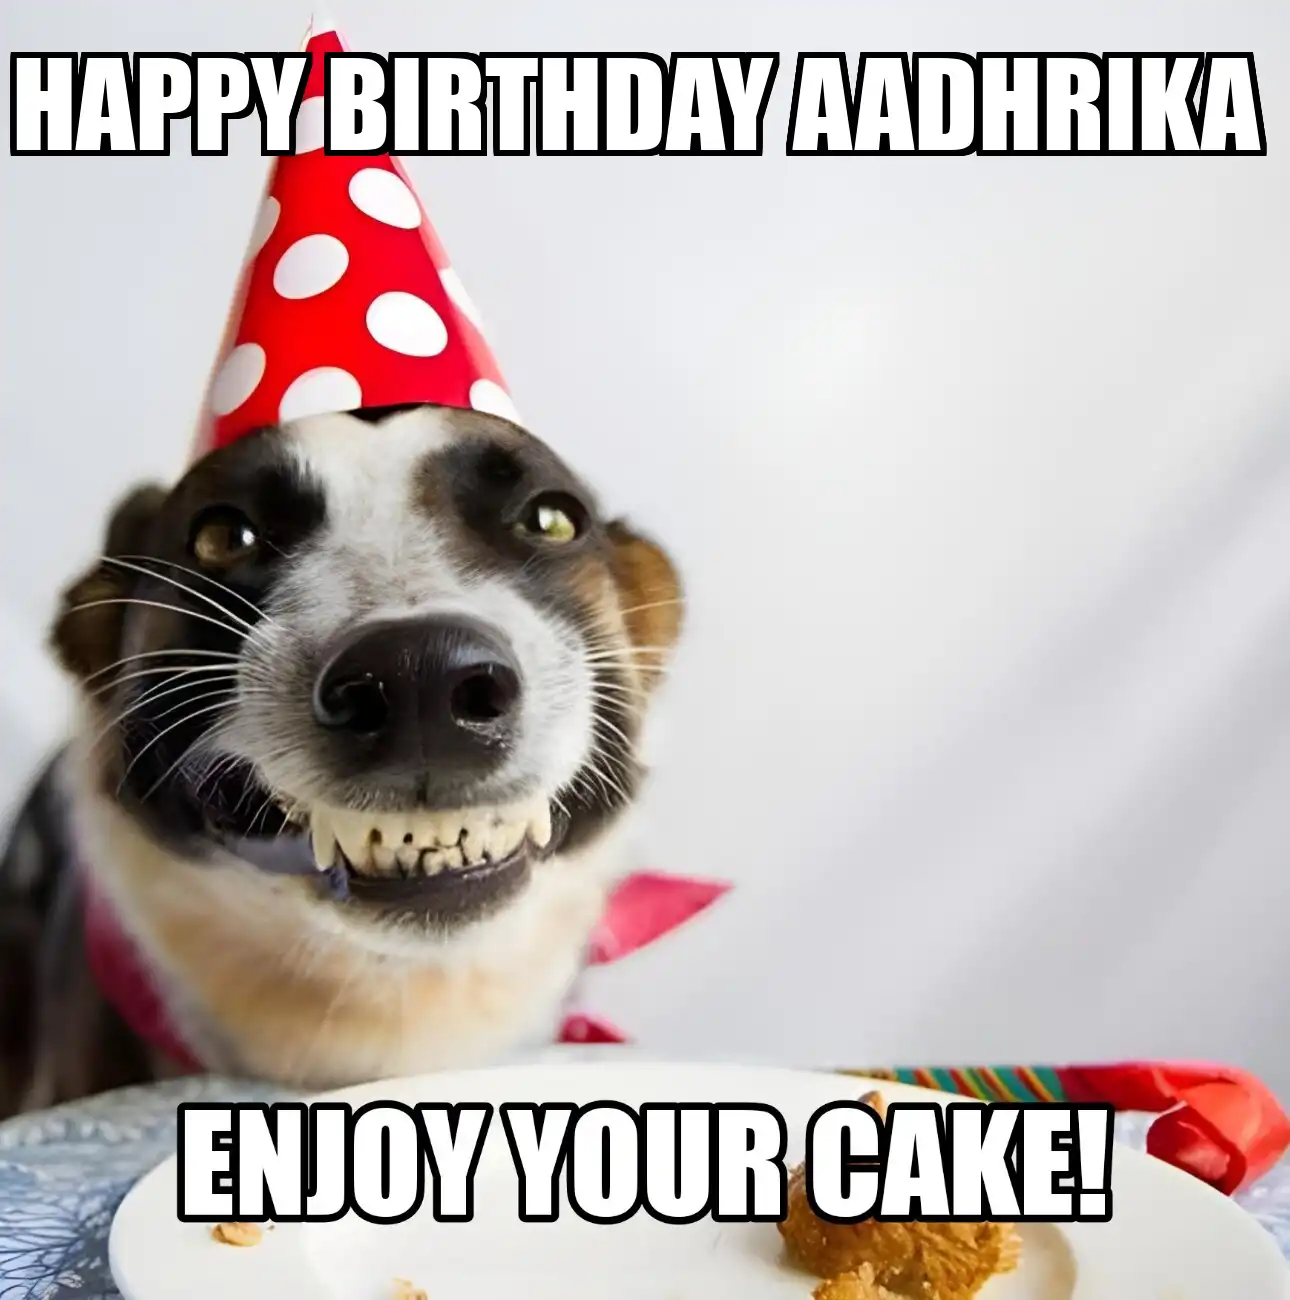 Happy Birthday Aadhrika Enjoy Your Cake Dog Meme